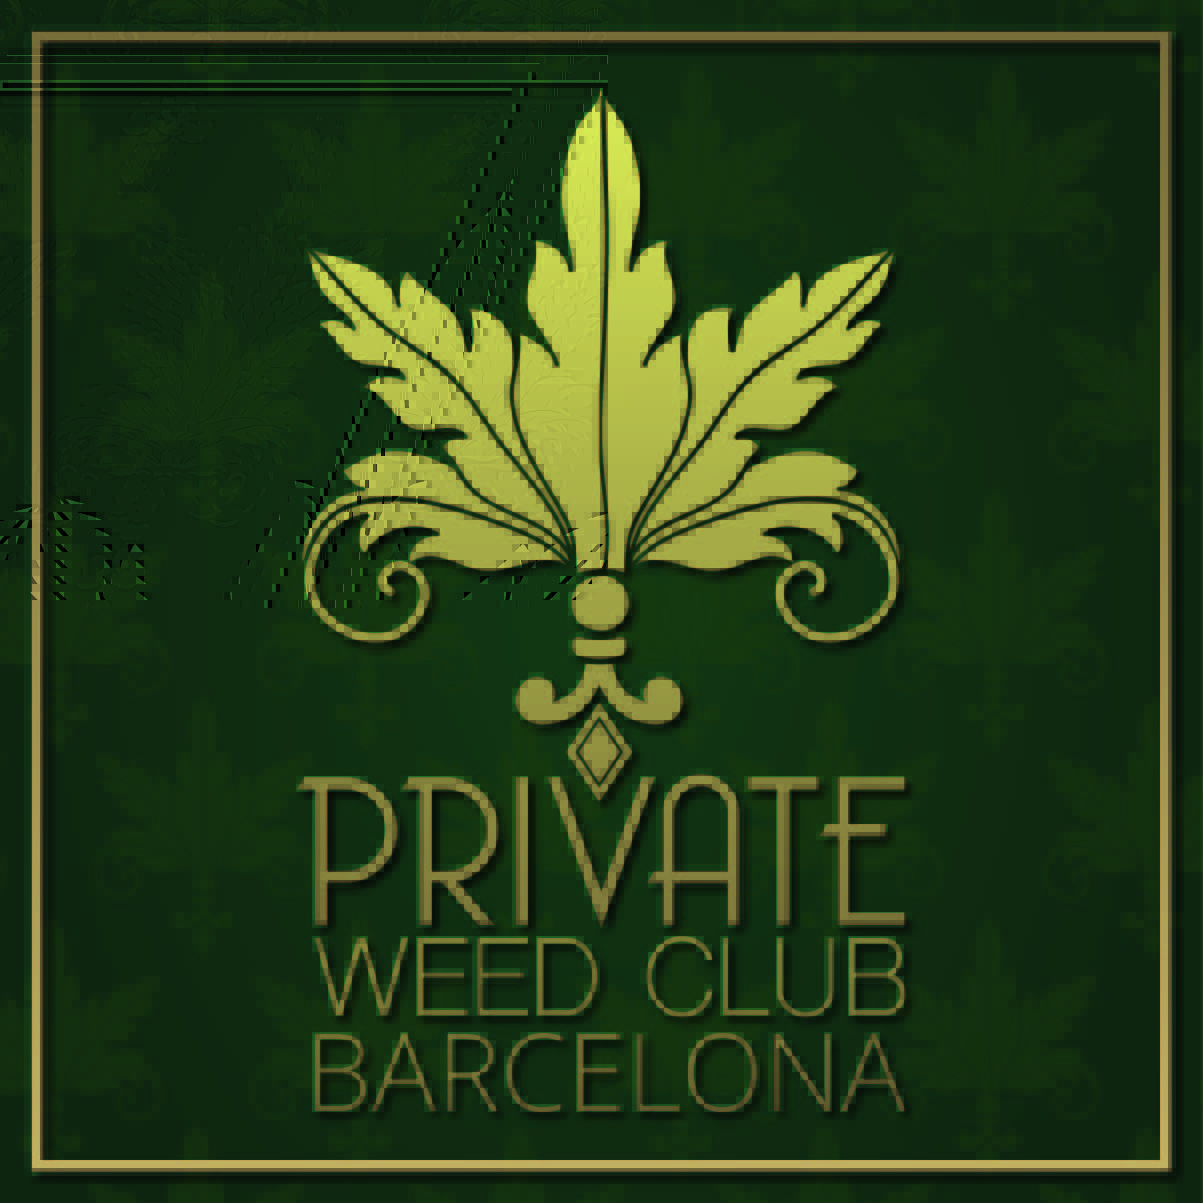 Barcelona Private Cannabis Club 